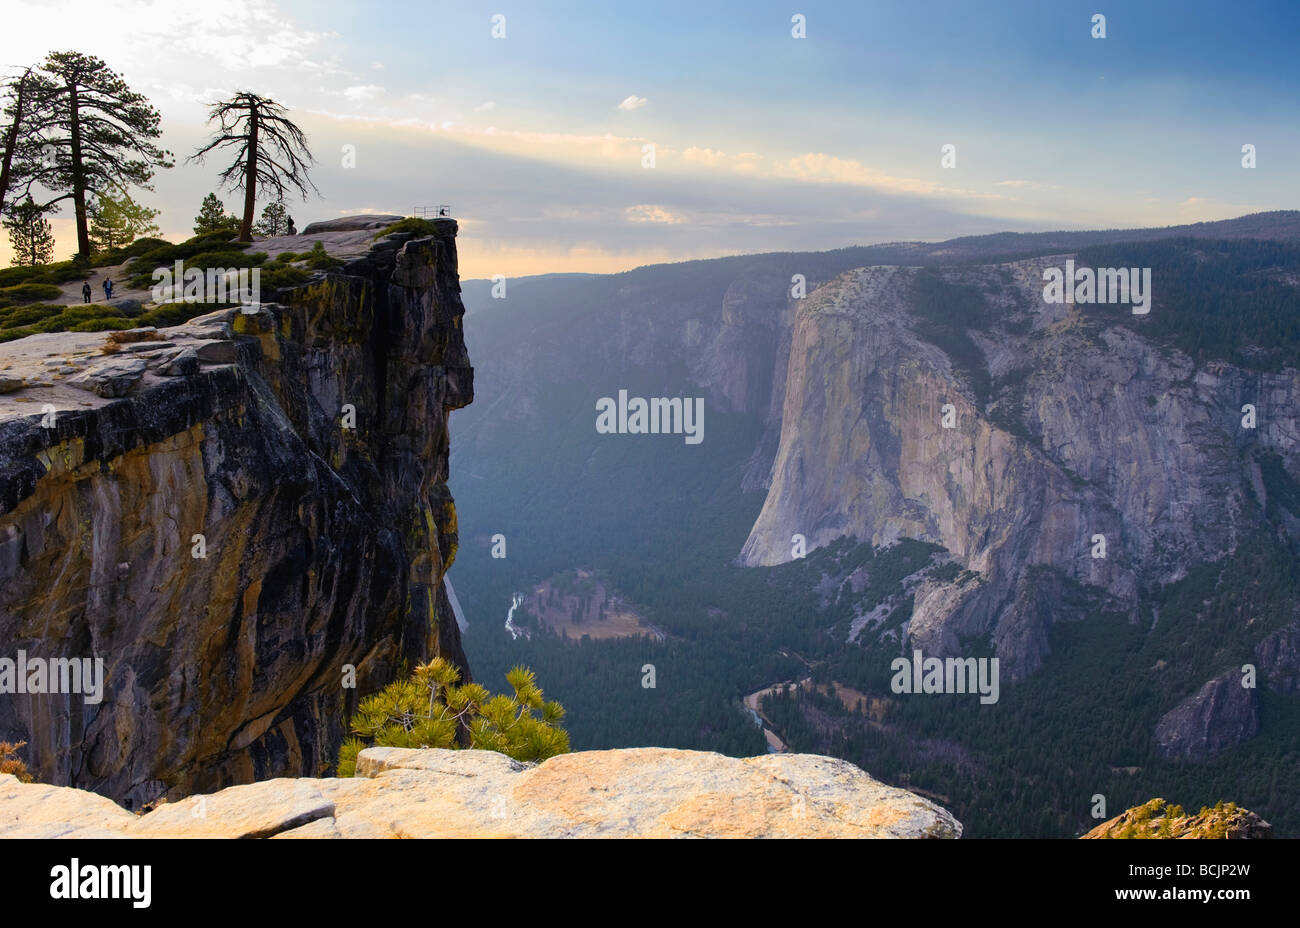 USA, California, Yosemite-Nationalpark, Taft Point, erhöhten Blick auf El Capitan und Yosemite Valley Stockfoto